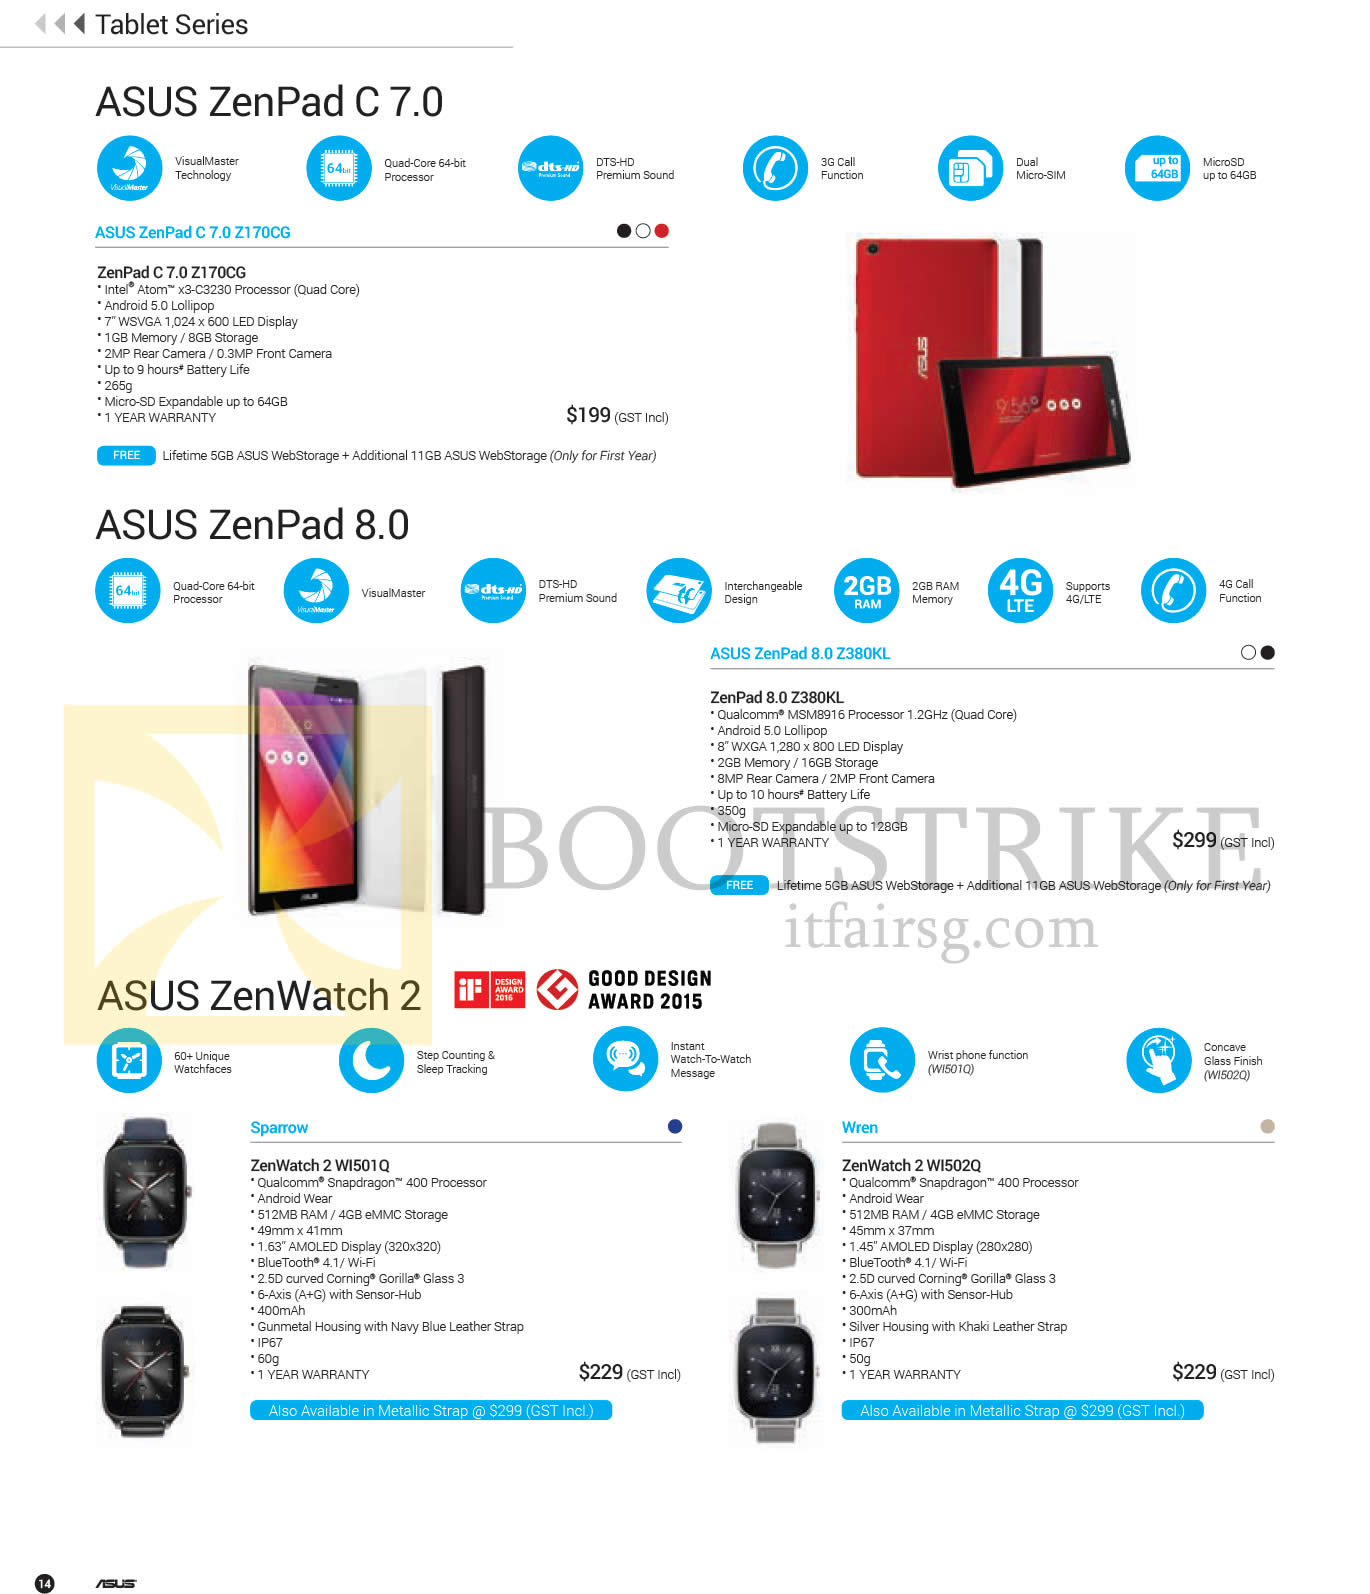 PC SHOW 2016 price list image brochure of ASUS Tablets ZenPad Series, ZenPad C 7.0 Z170CG, ZenPad 8.0 Z380KL, ZenWatch Series, ZenWatch 2 WI501Q, ZenWatch 2 WI502Q